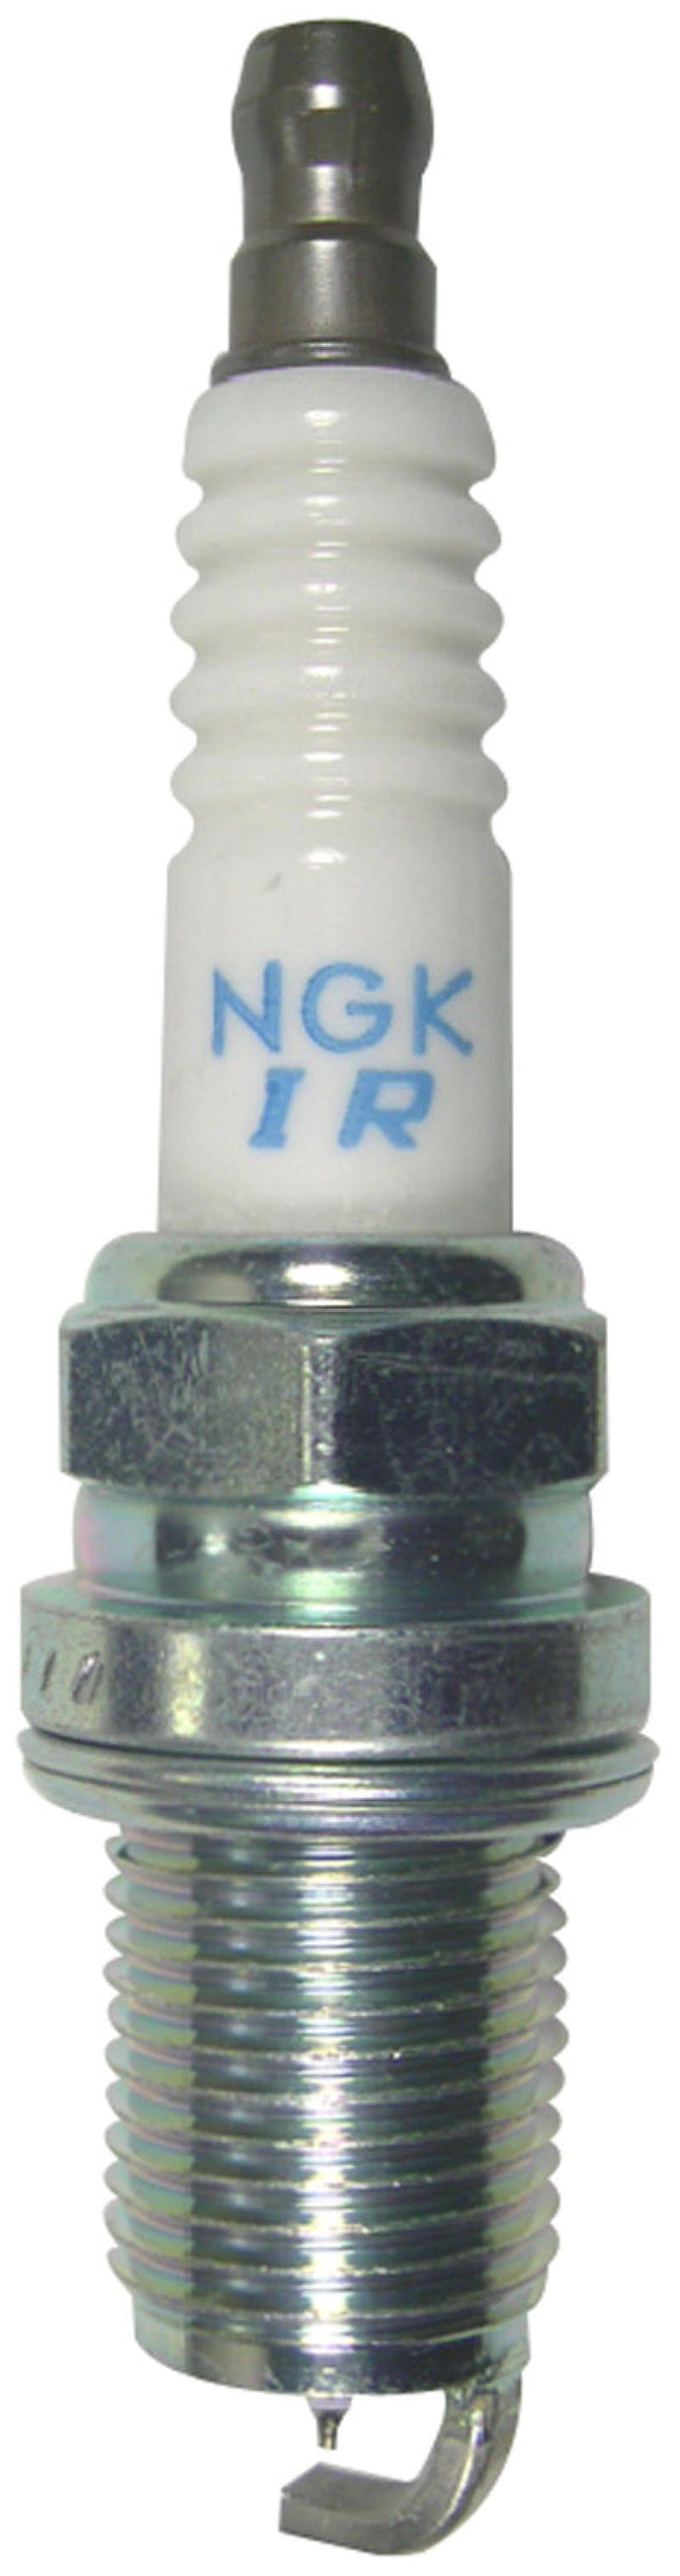 NGK NGK3107